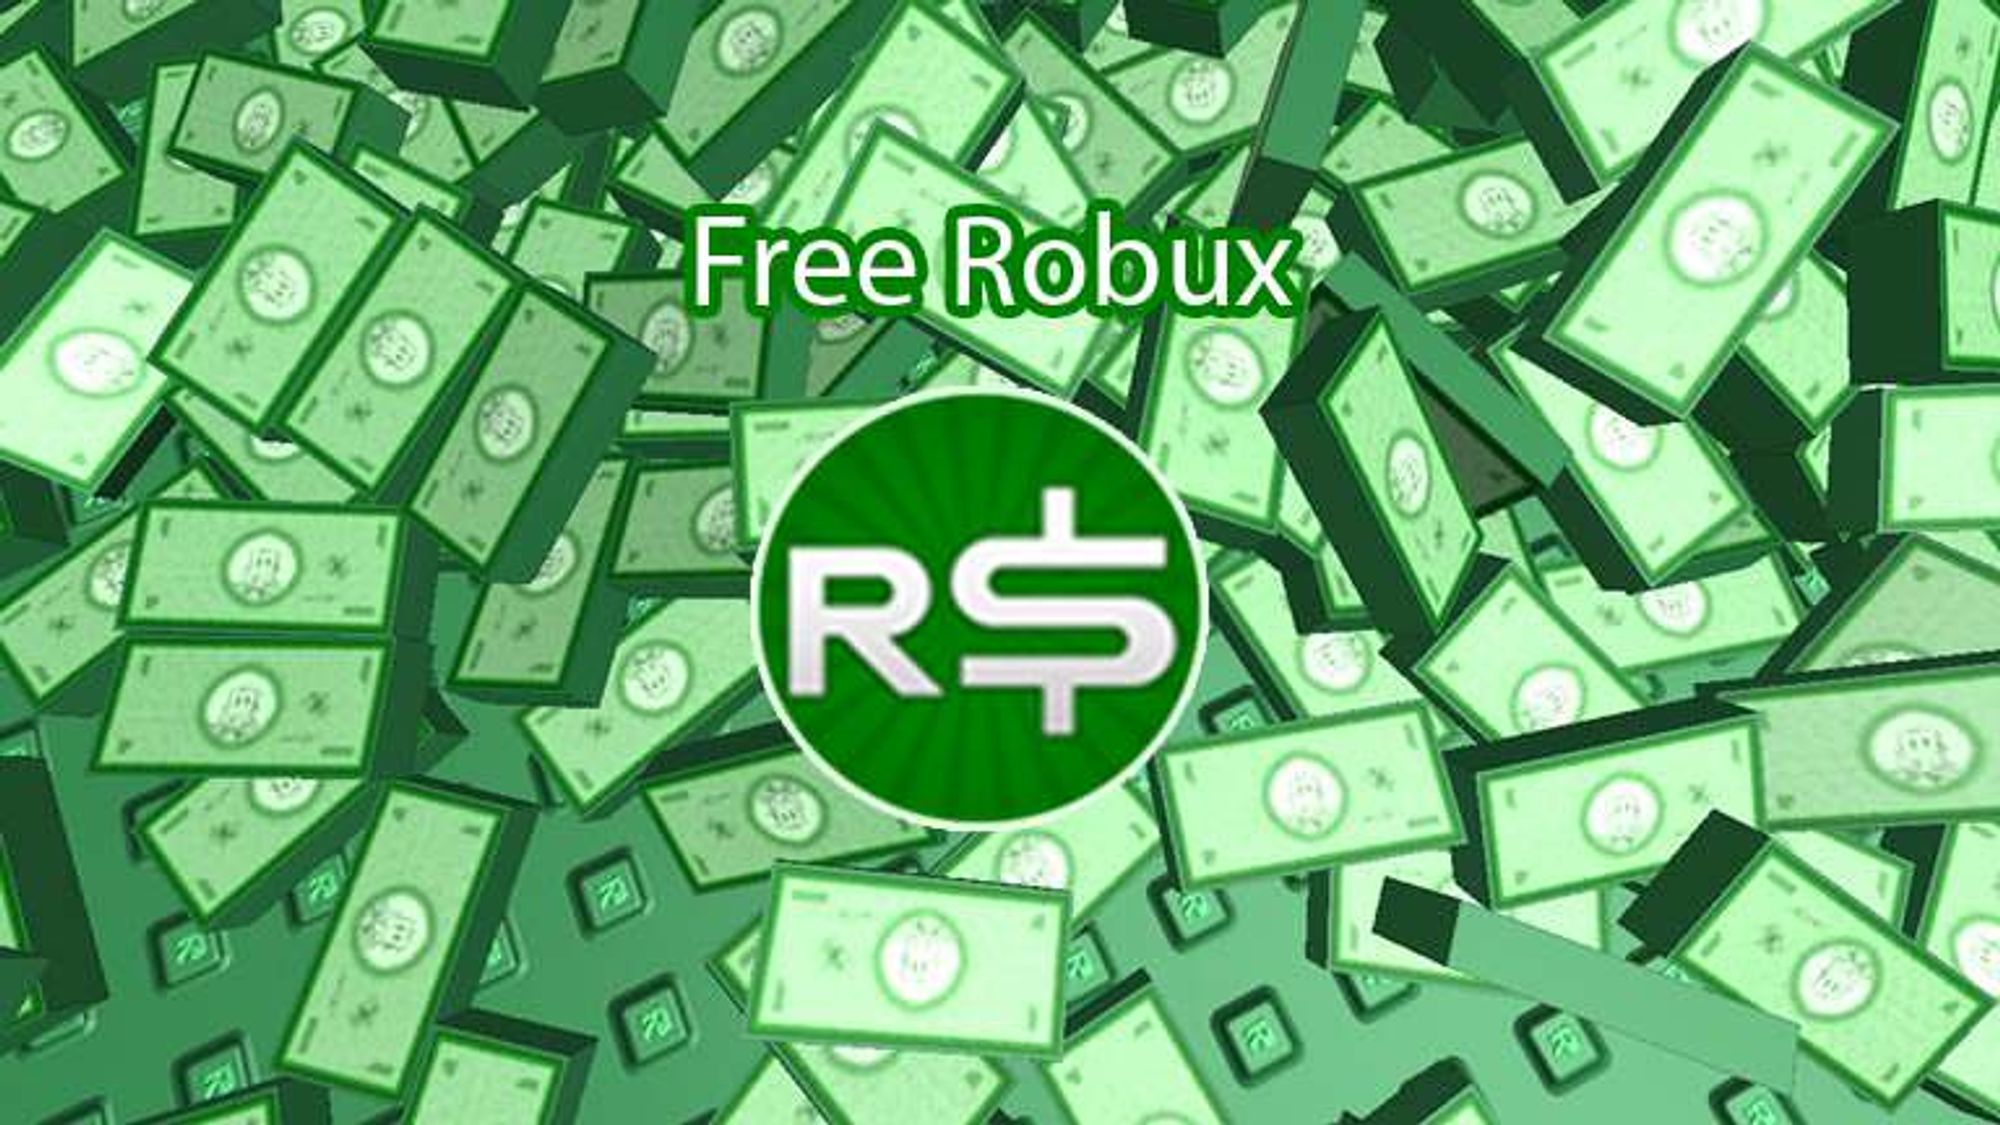 Roblox Robux Hack Free Robux Generator No Human Verification Or Survey - free robux no human verification or survey 2019